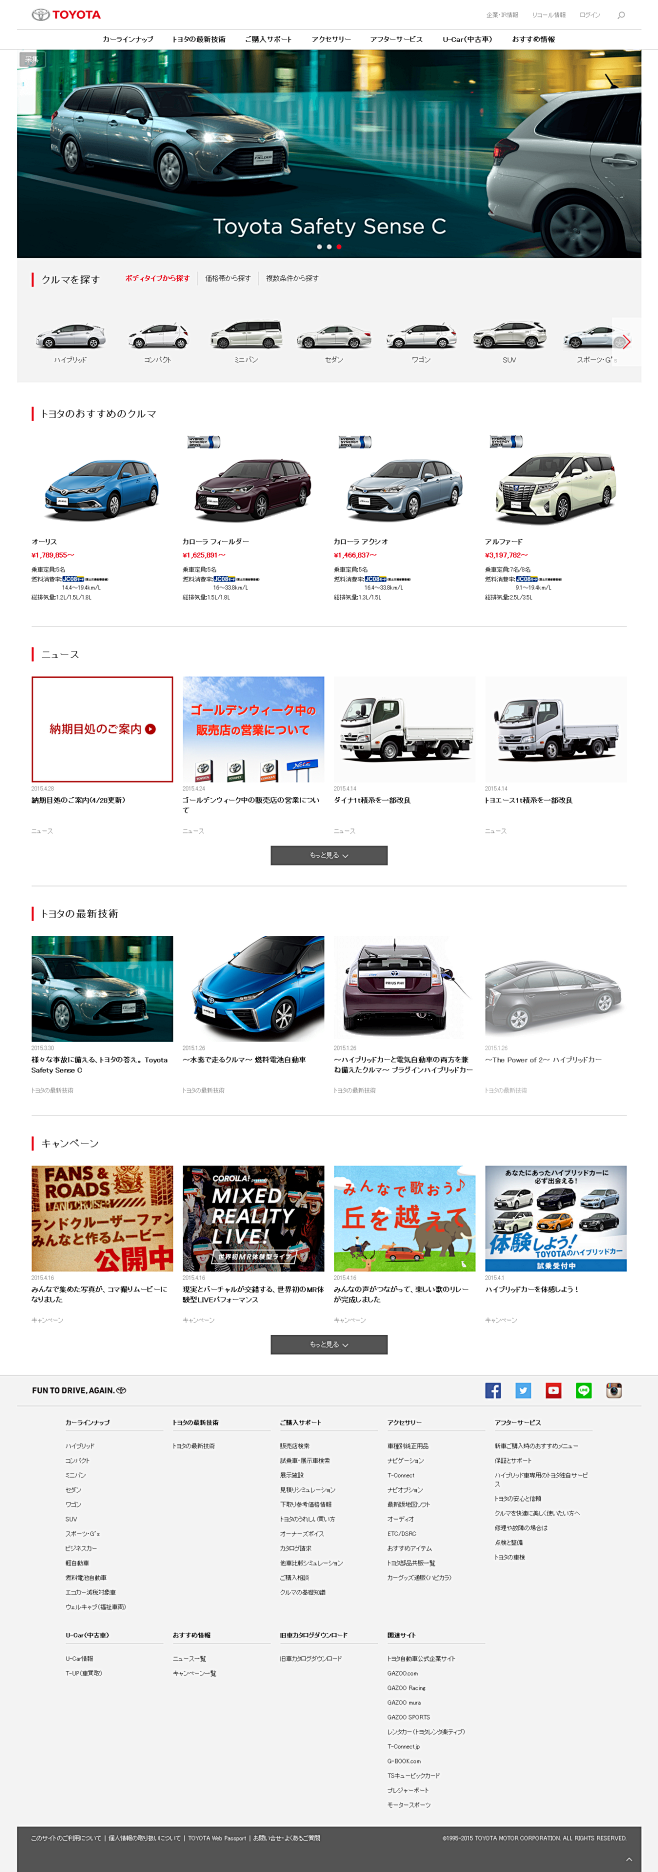 日本汽车网站设计
 
トヨタ自動車WEB...